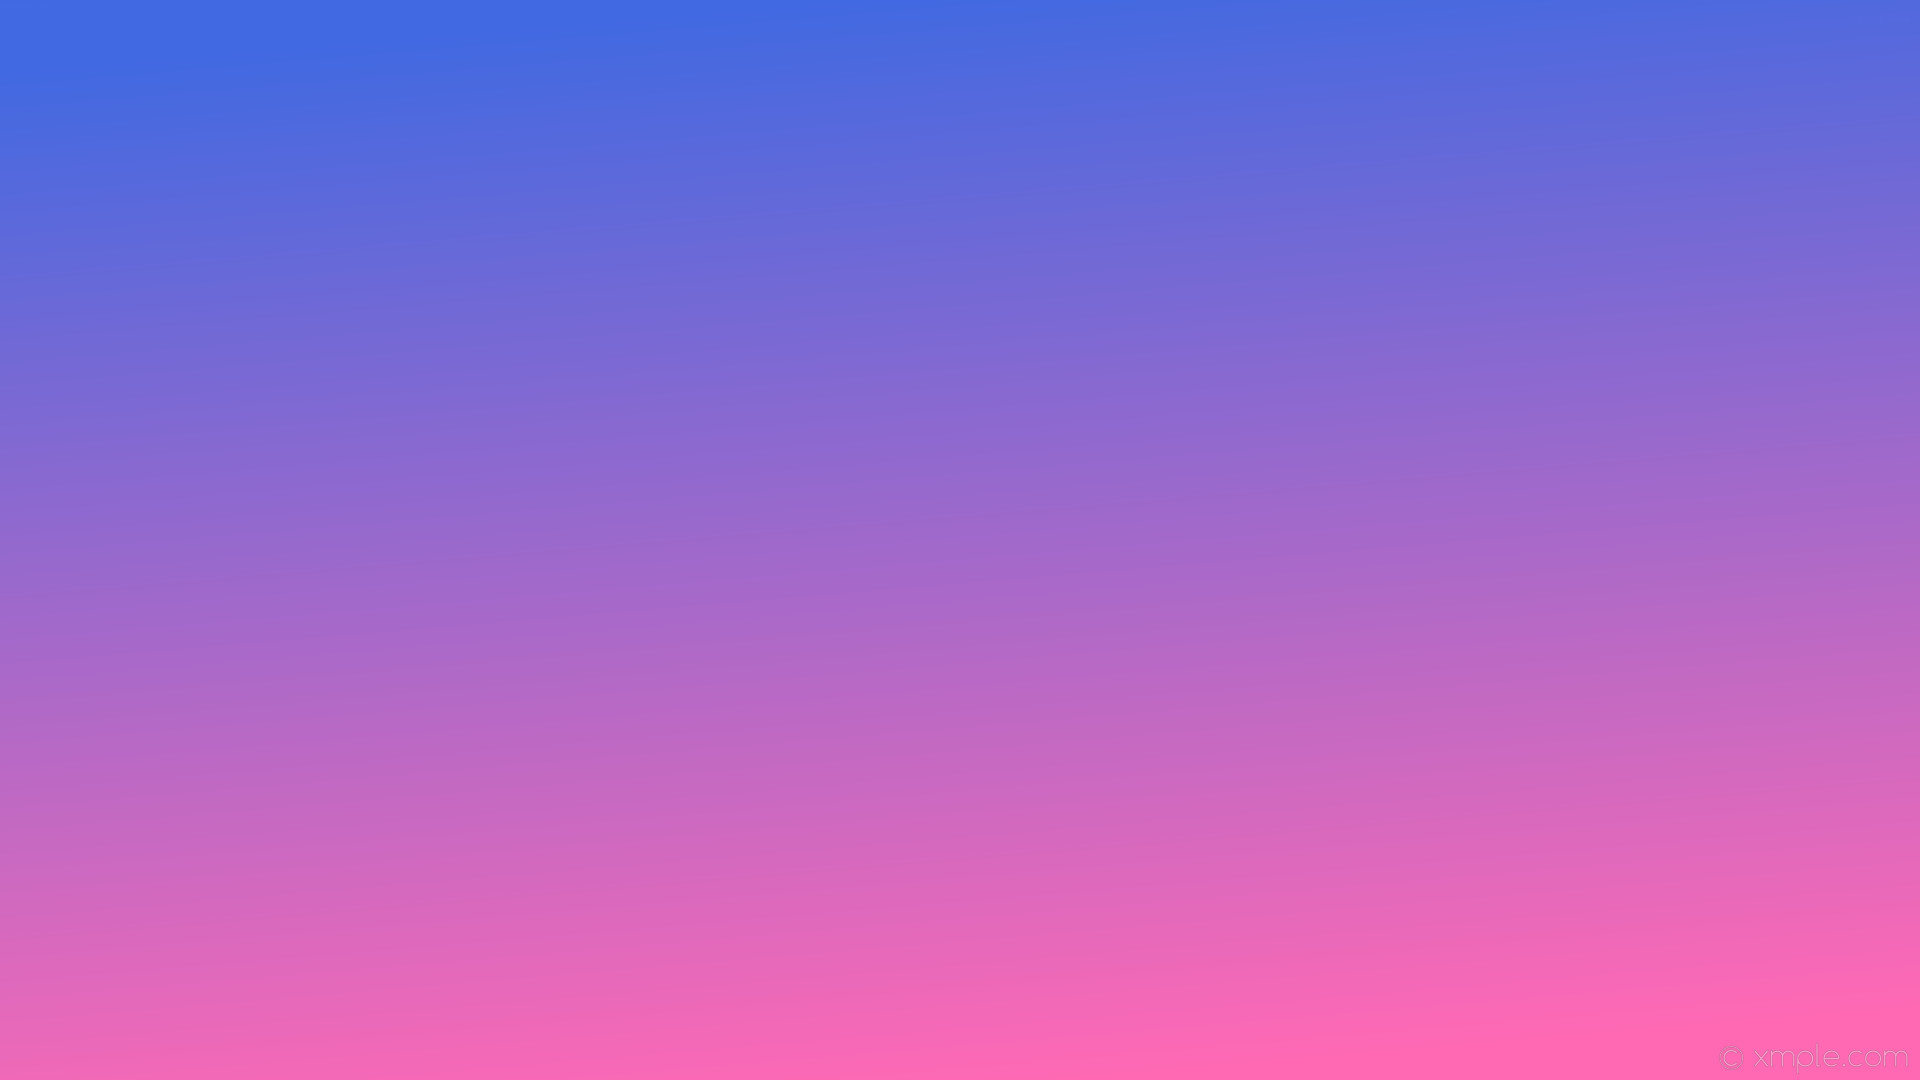 1920x1080 wallpaper pink gradient linear blue royal blue hot pink #4169e1 #ff69b4 105Â°